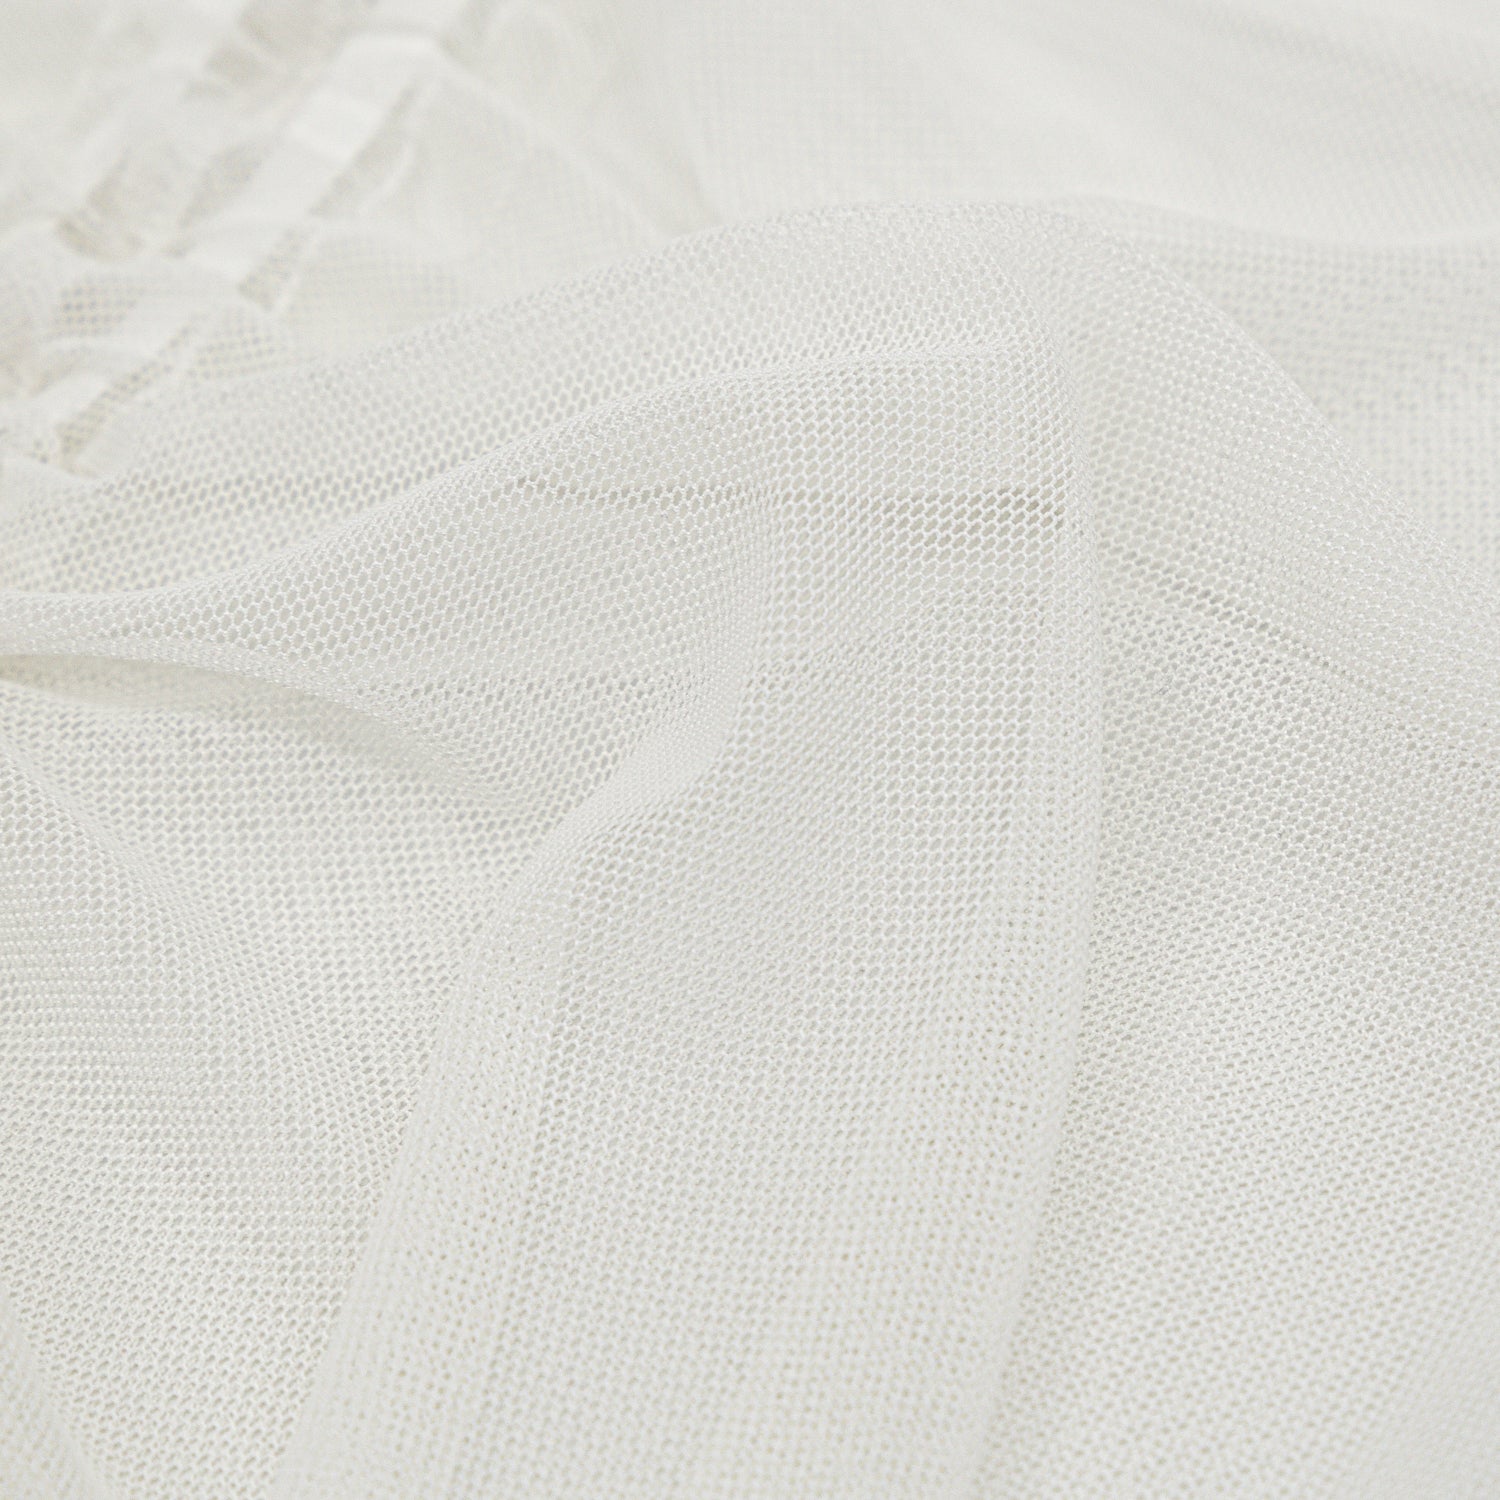 Translucent dress white